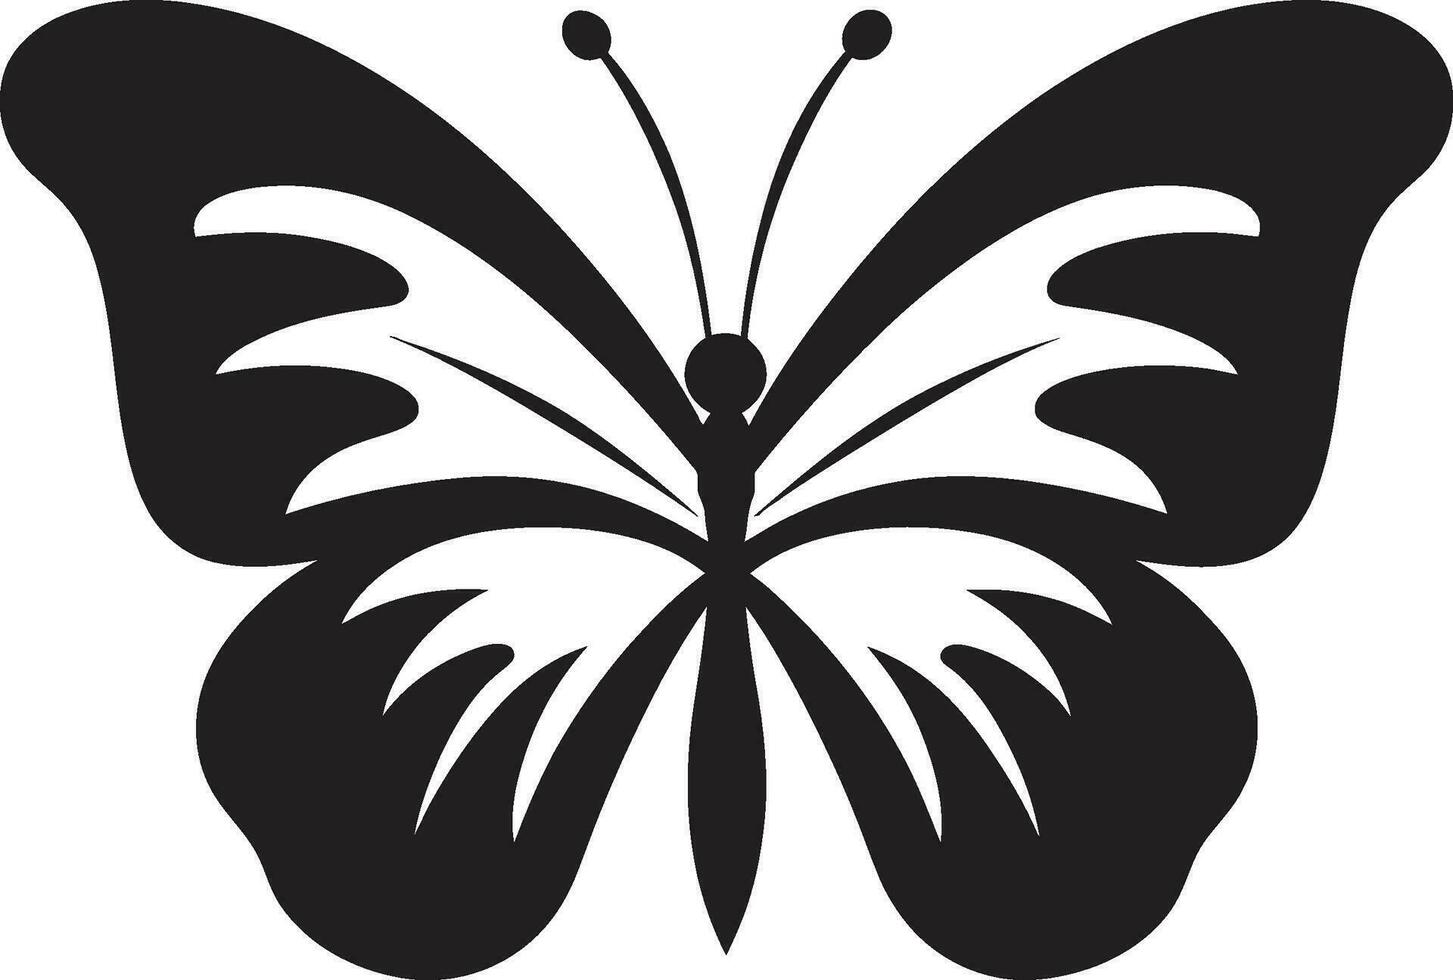 Mystique Takes Wing Black Butterfly Design Elegant Flight in Noir Butterfly Symbol vector